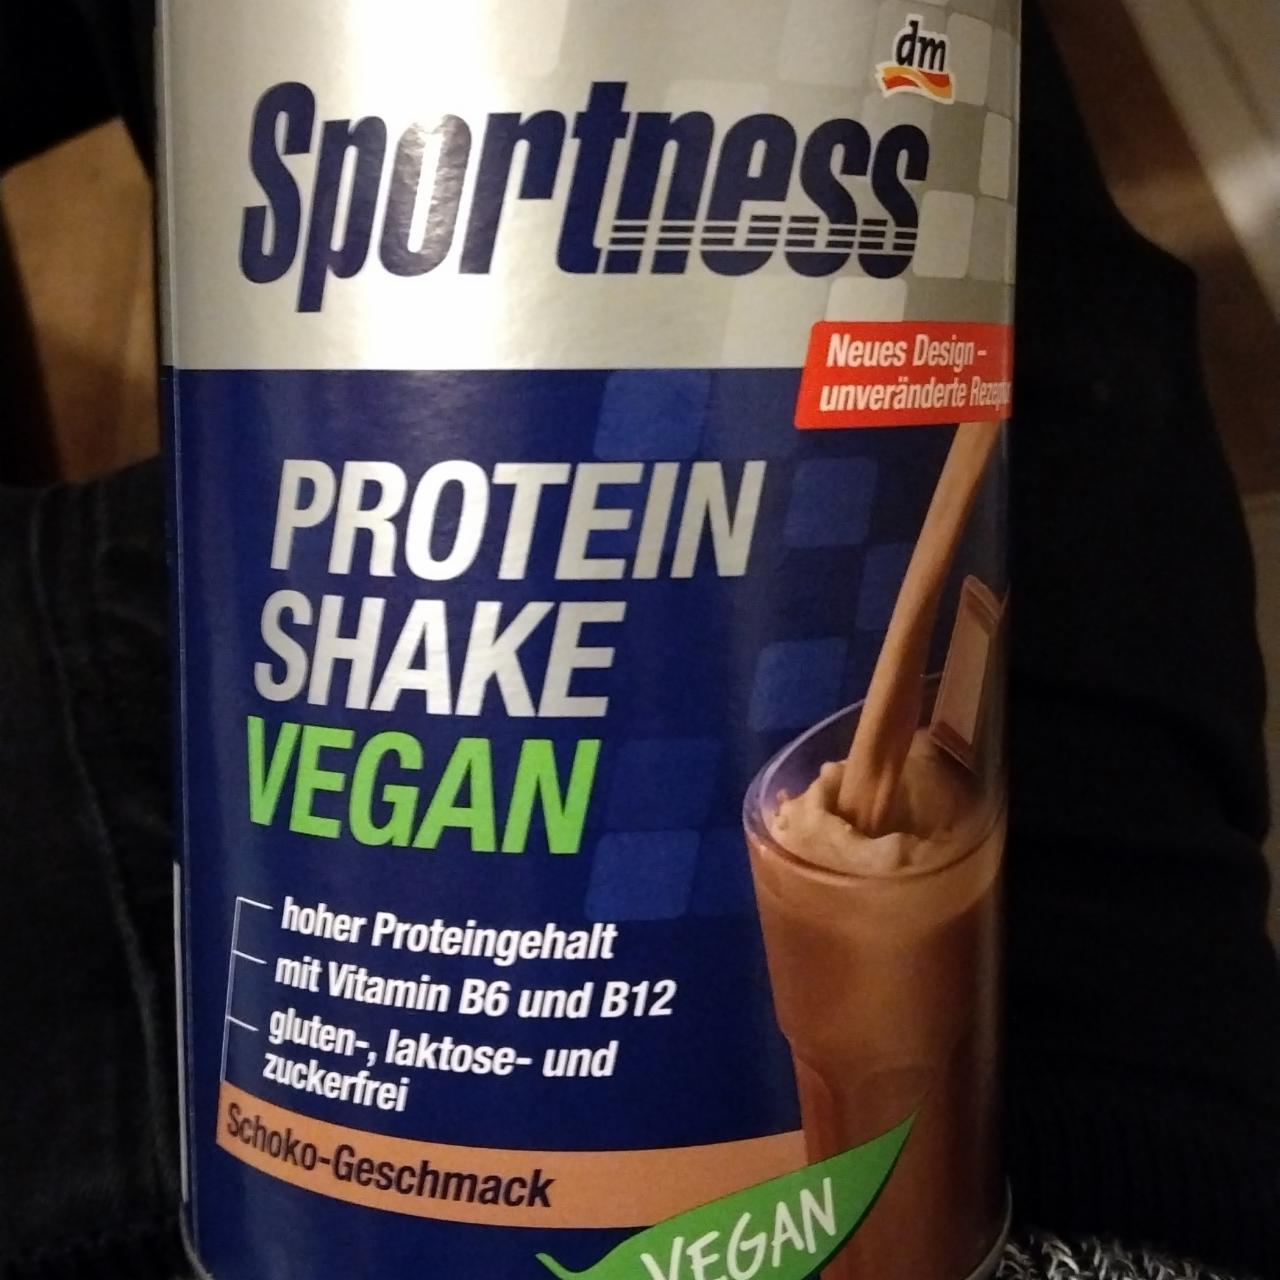 Fotografie - Protein shake vegan Schoko-Geschmack Sportness